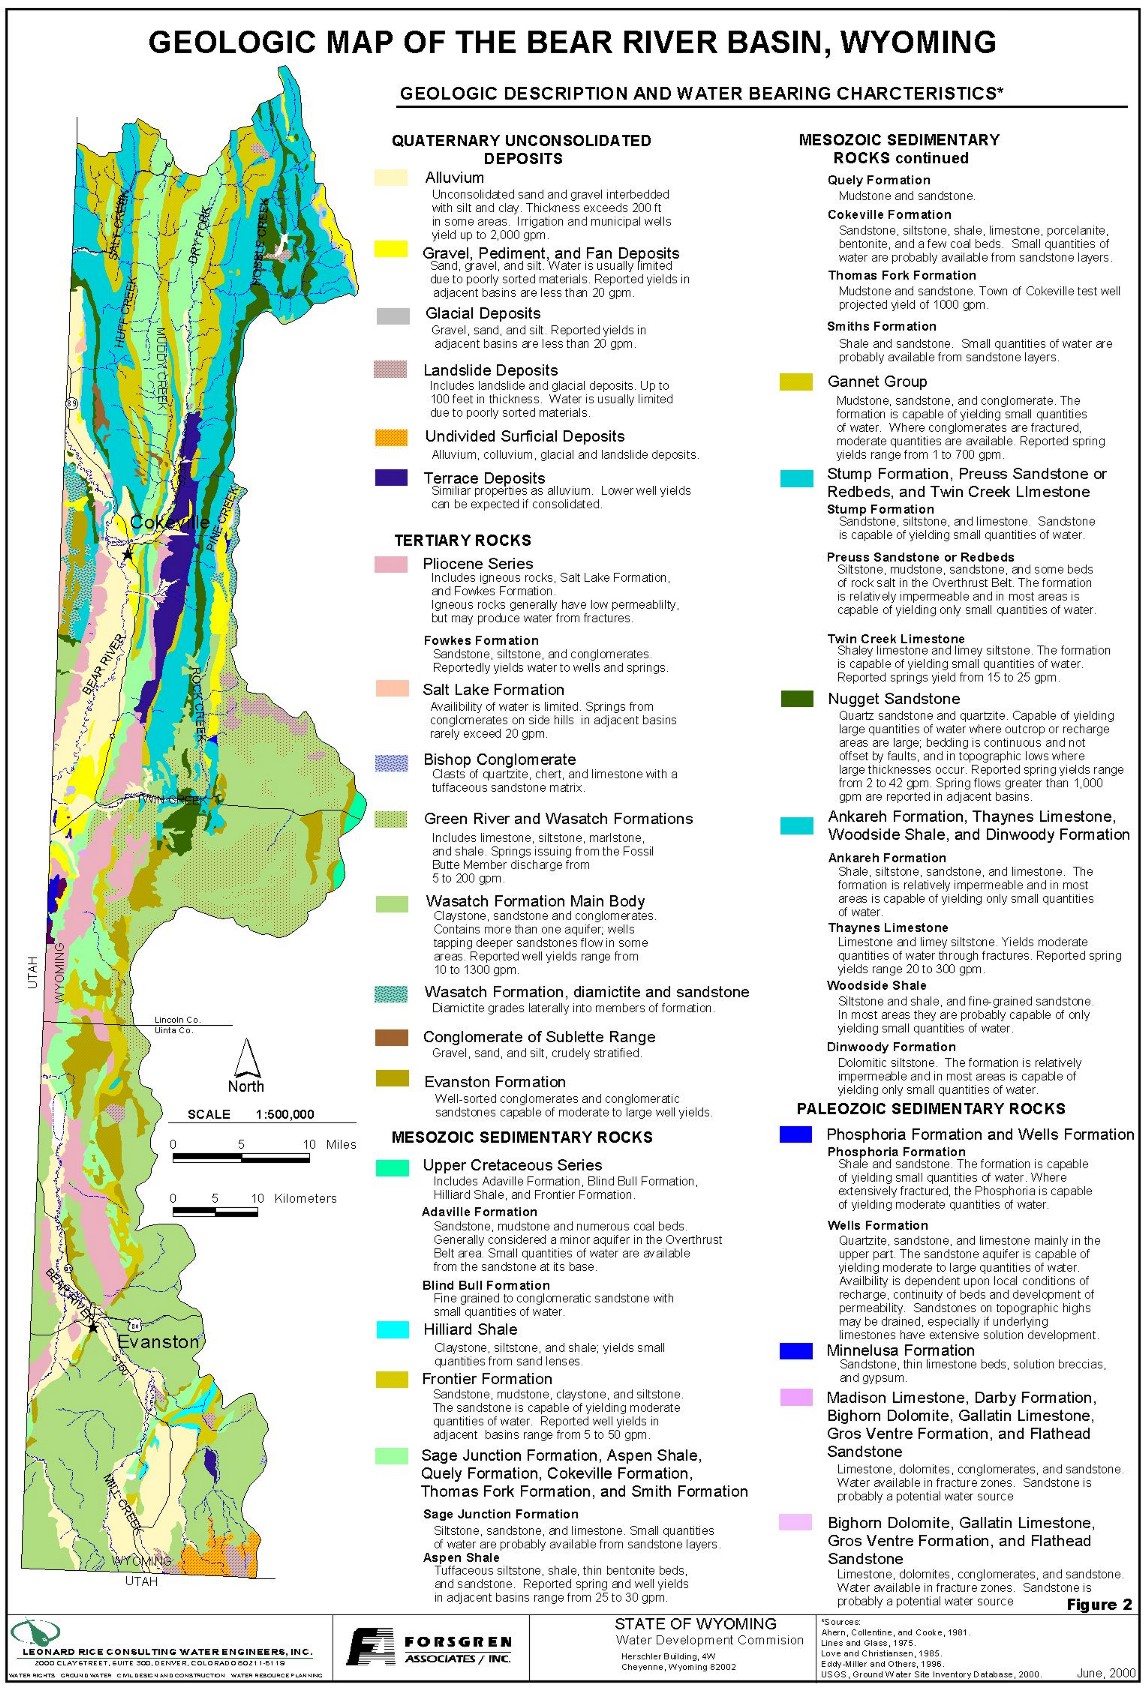 Geologic Map of the Bear River Basin